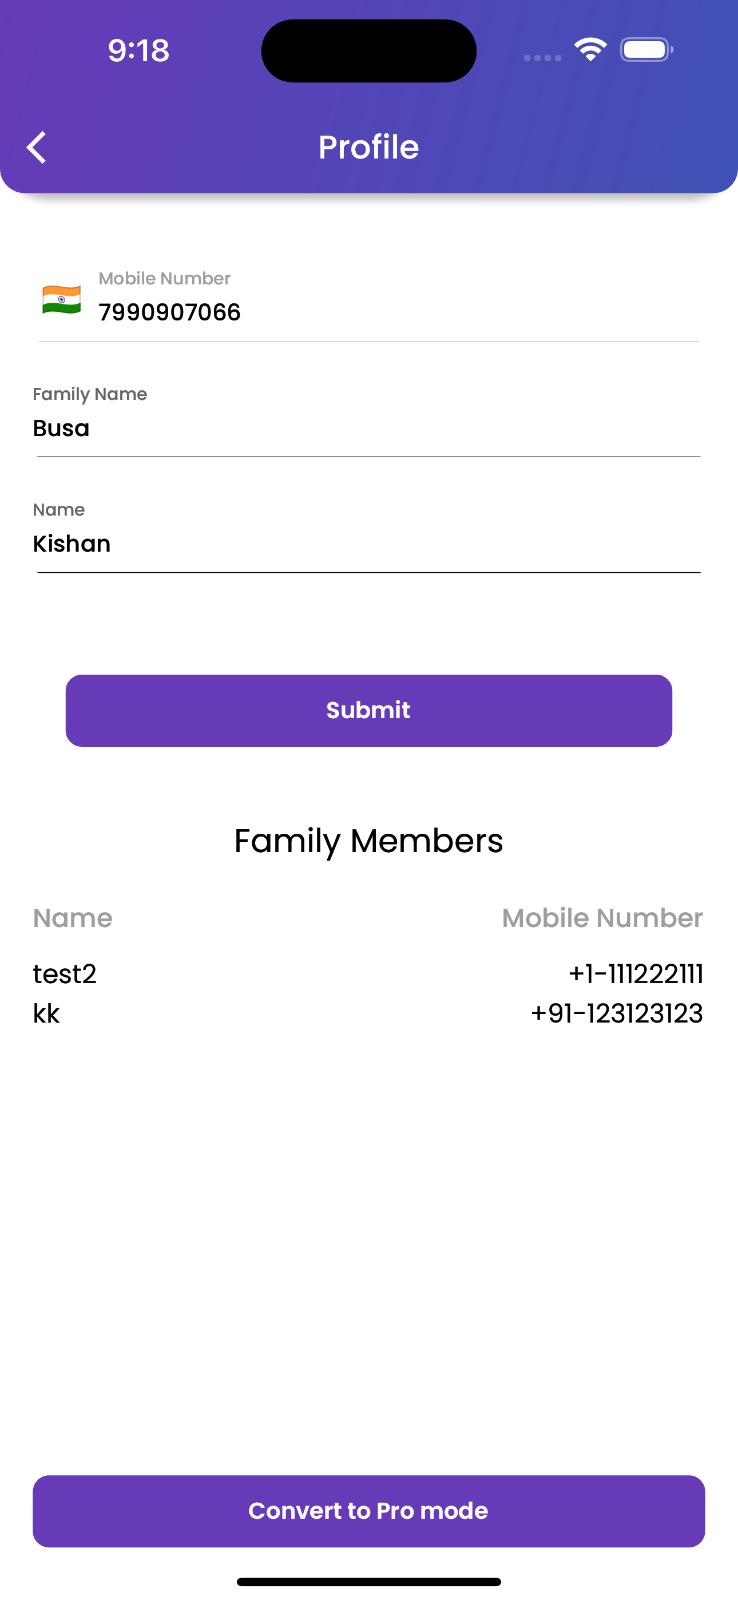 Family Members listing